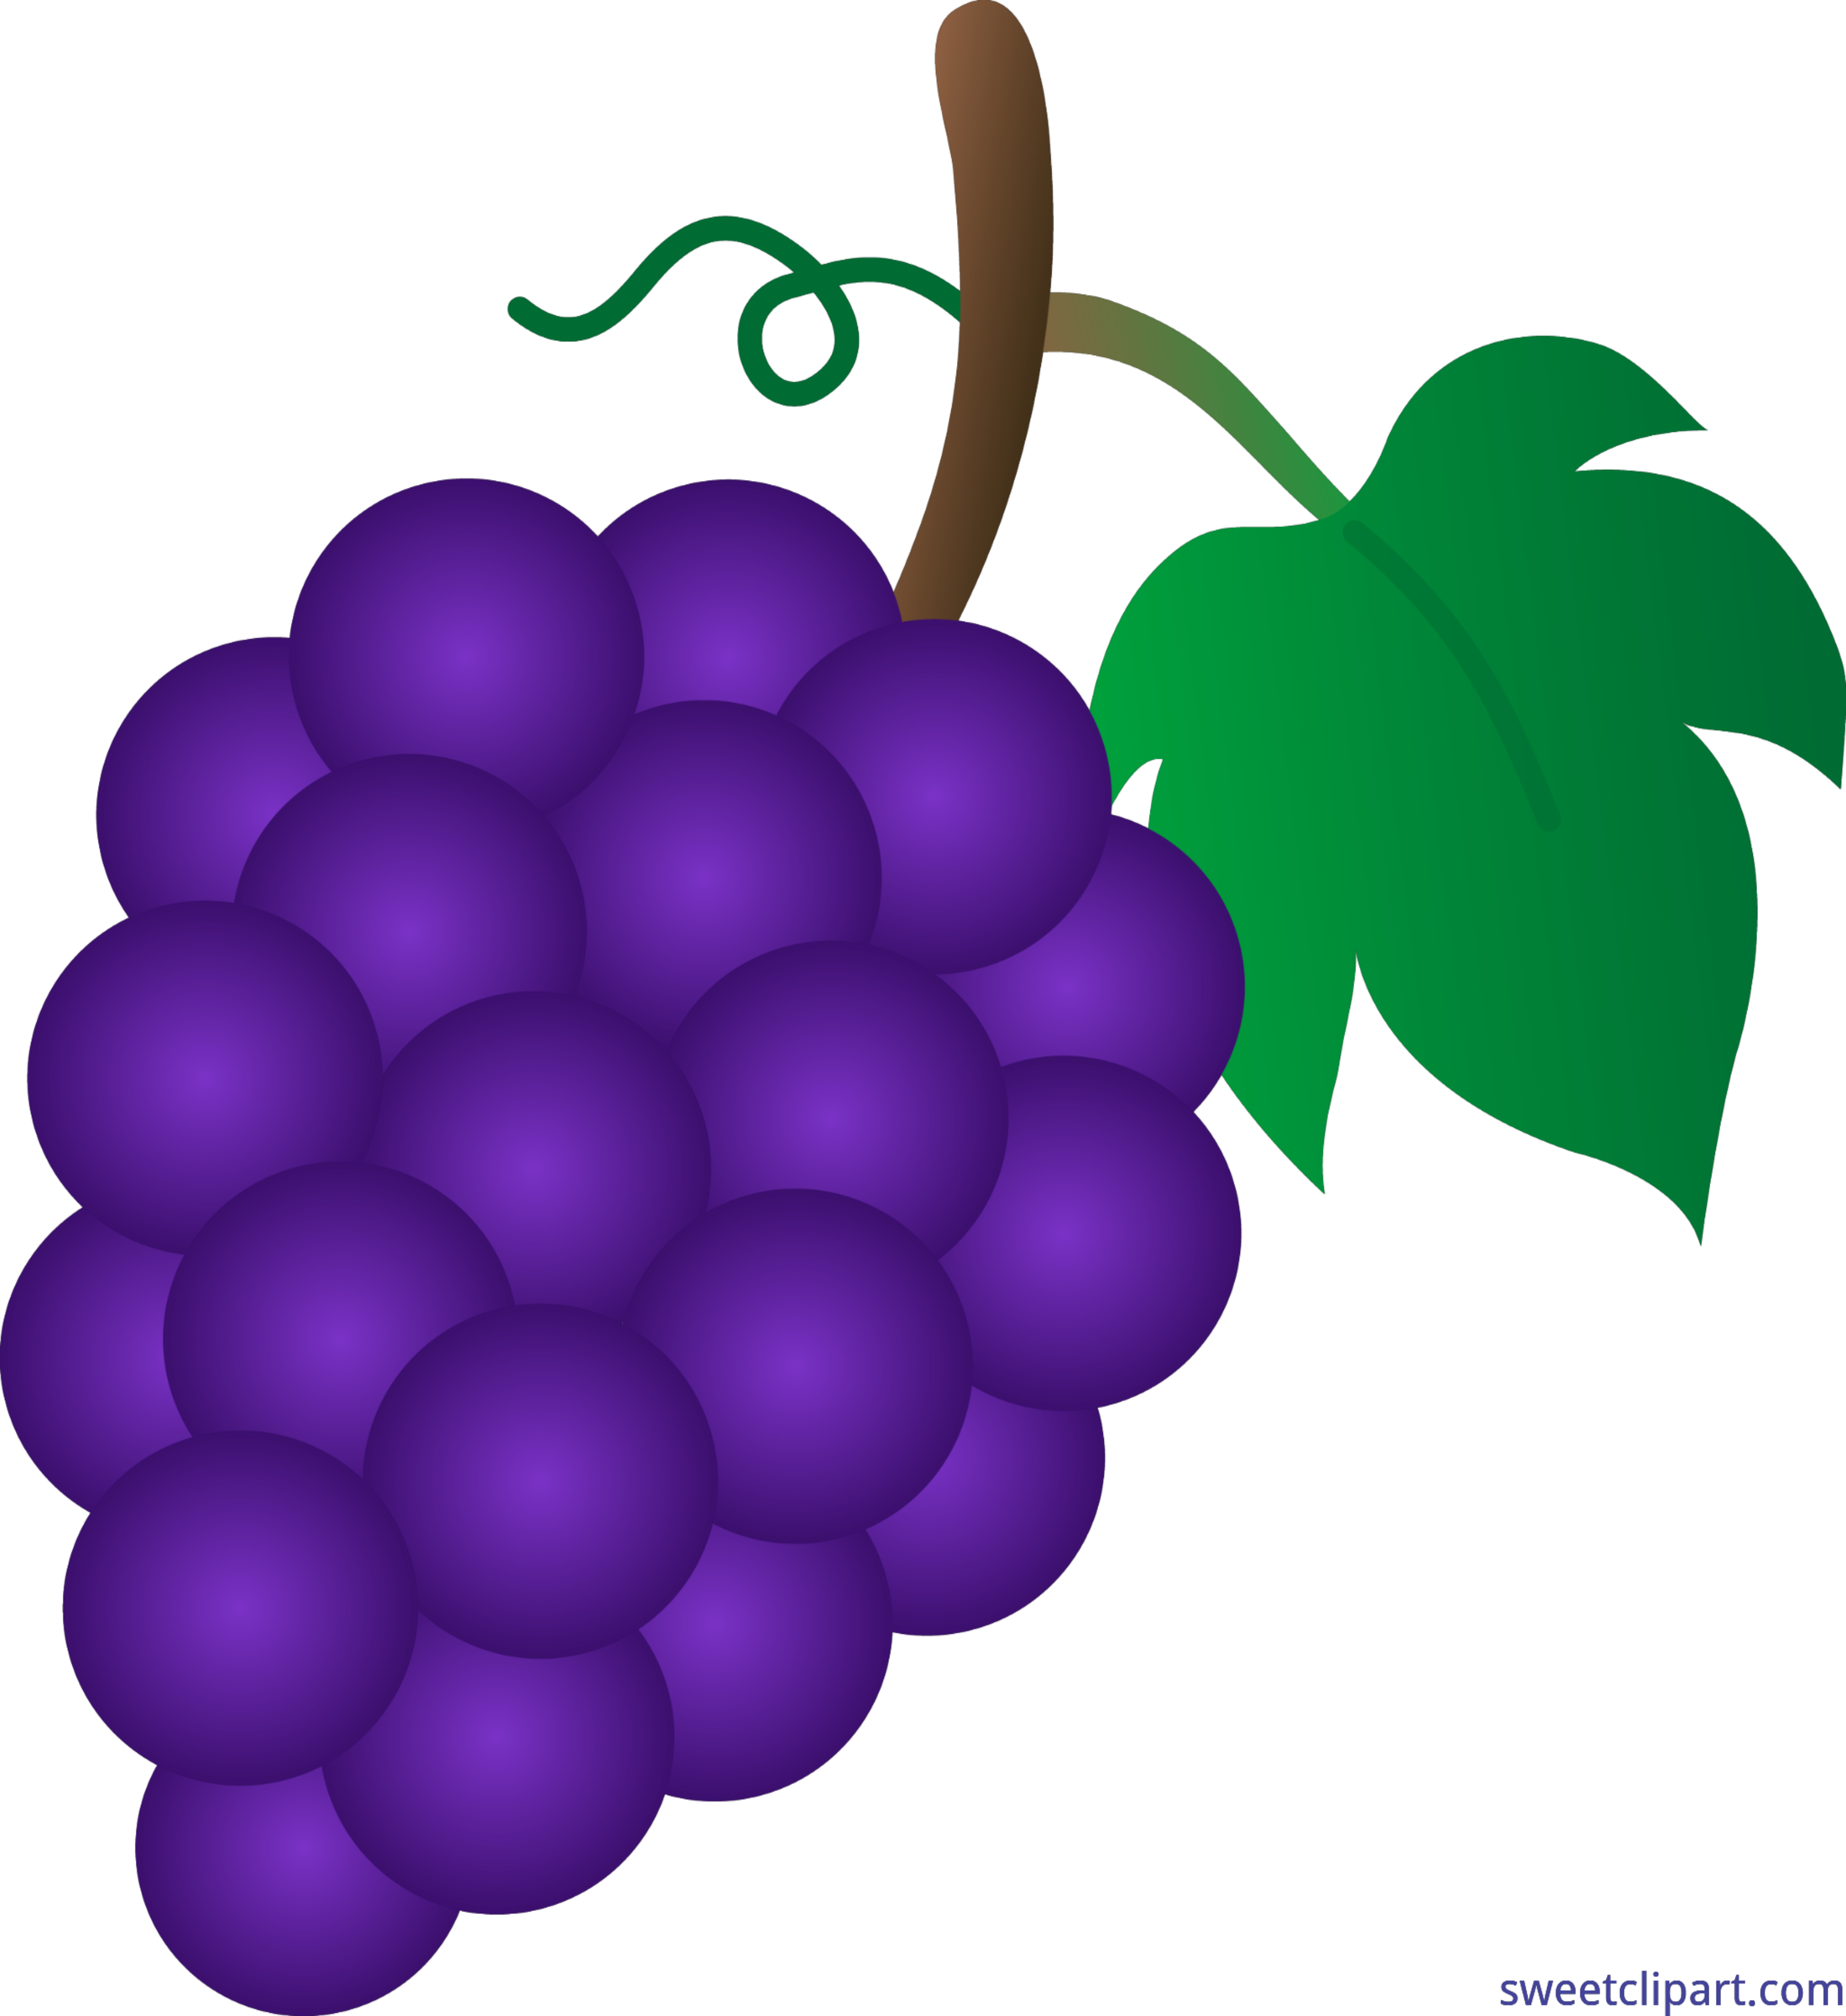 Grape clipart fruit, Grape fruit Transparent FREE for